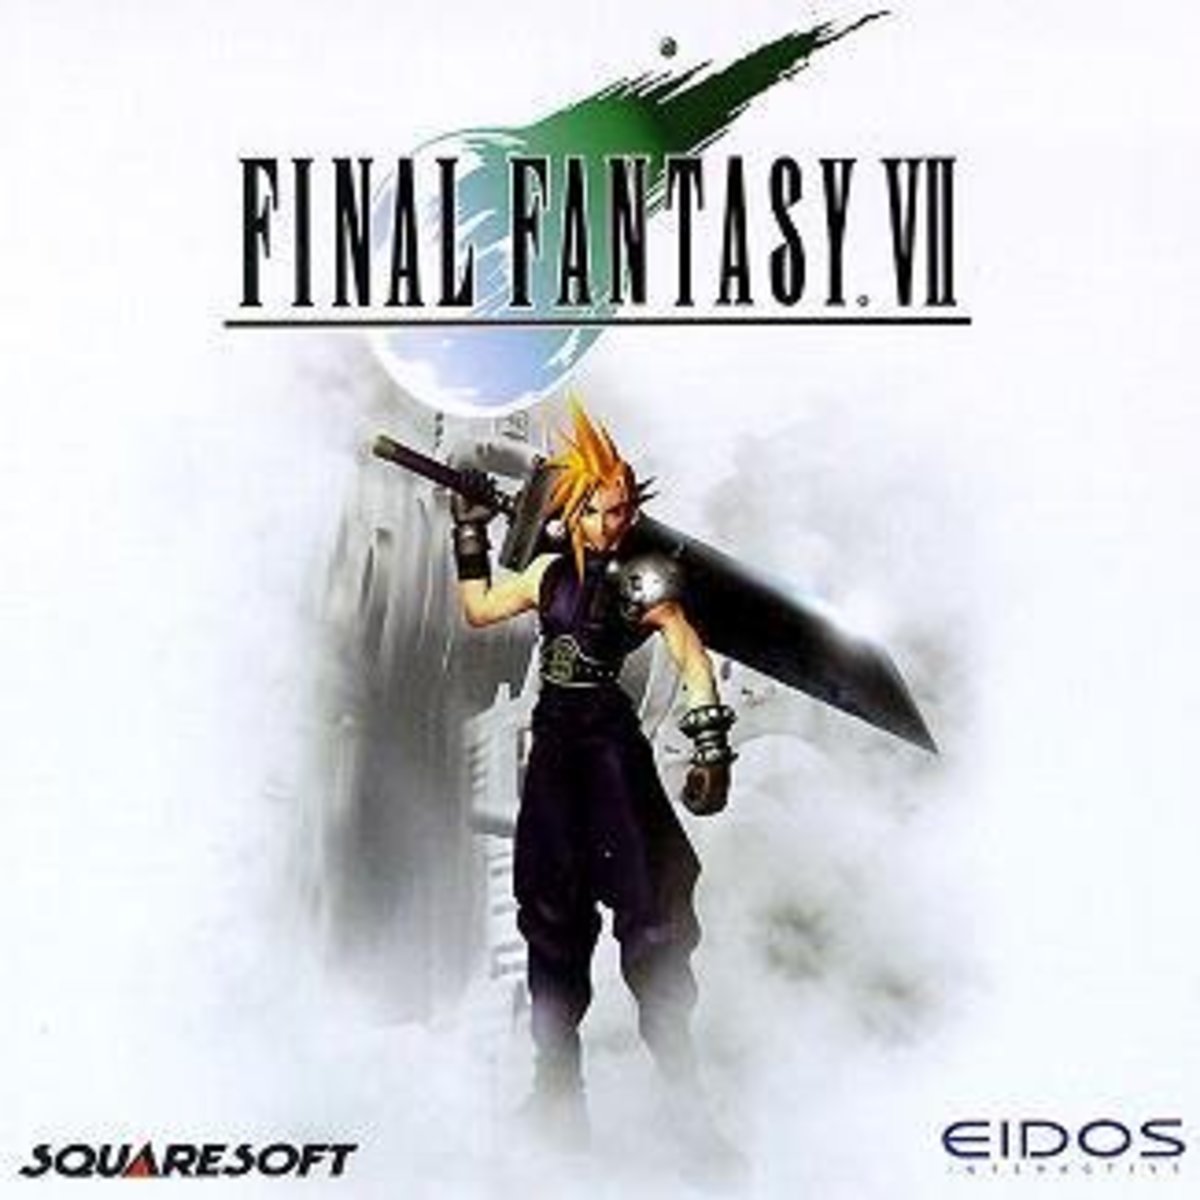 "Final Fantasy VII"